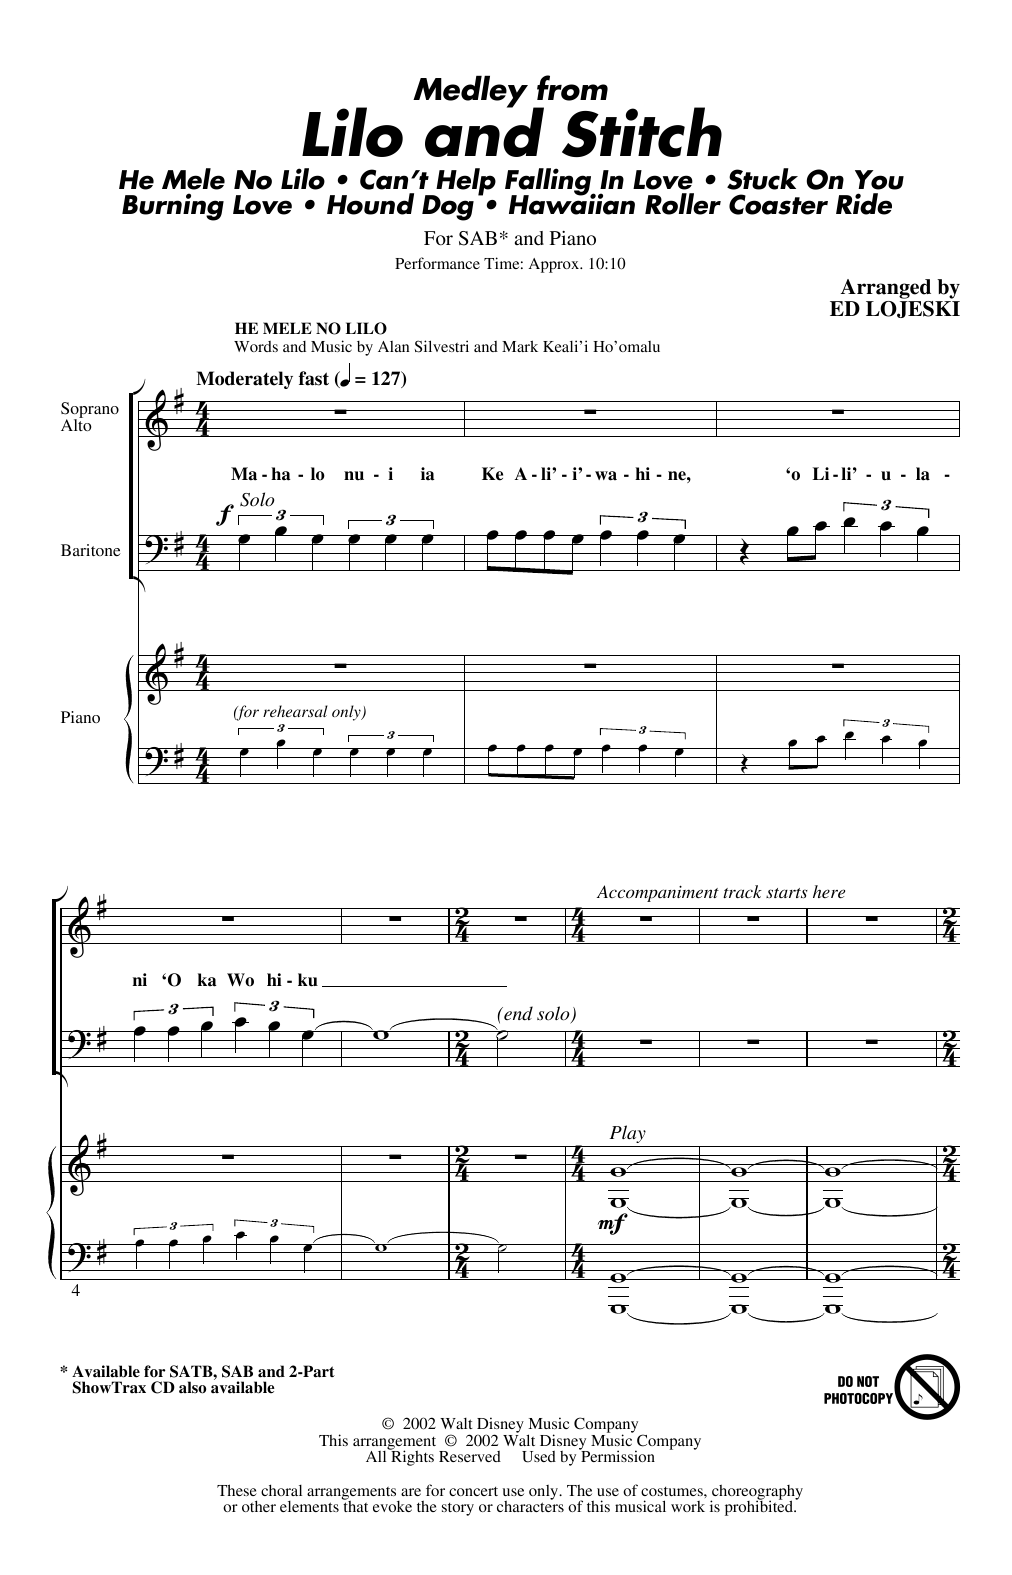 Ed Lojeski Lilo And Stitch (Medley) Sheet Music Notes & Chords for SAB Choir - Download or Print PDF